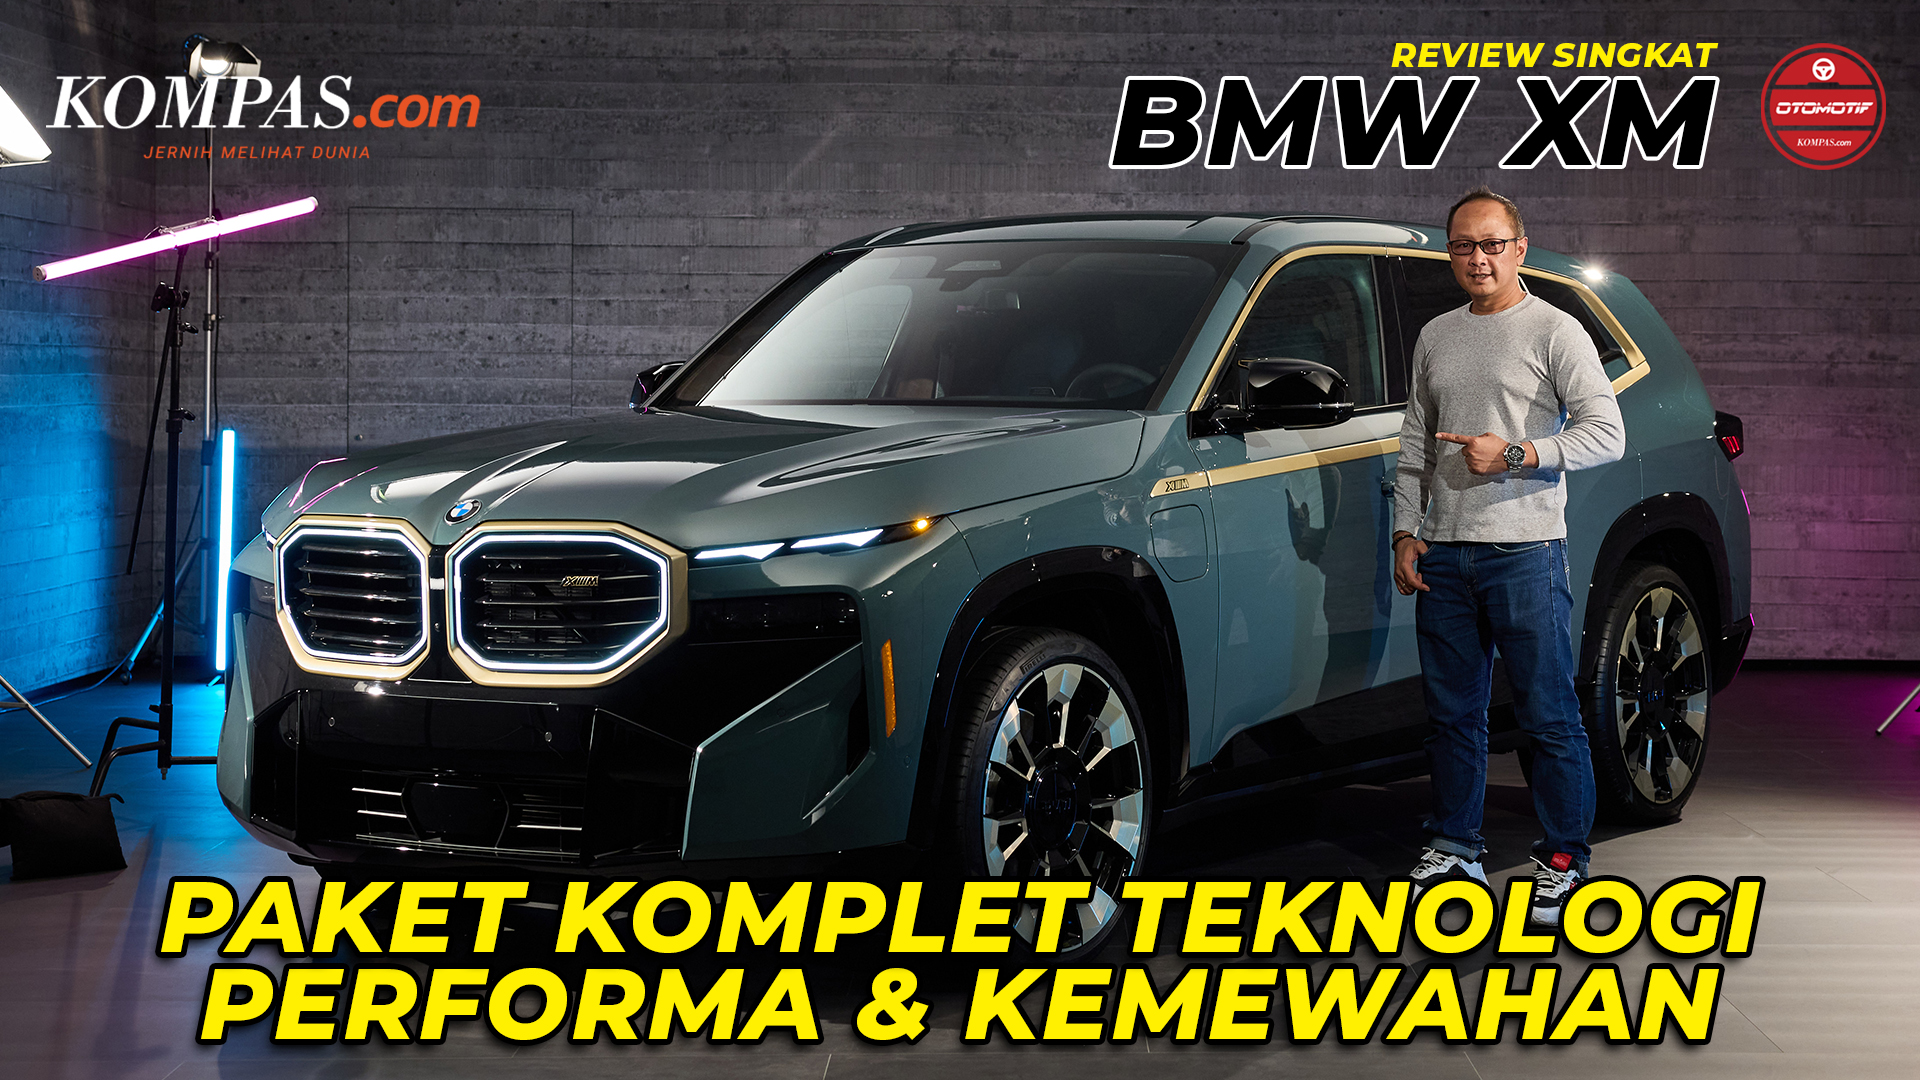 REVIEW SINGKAT | BMW XM | Paket Komplet Teknologi, Performa & Kemewahan